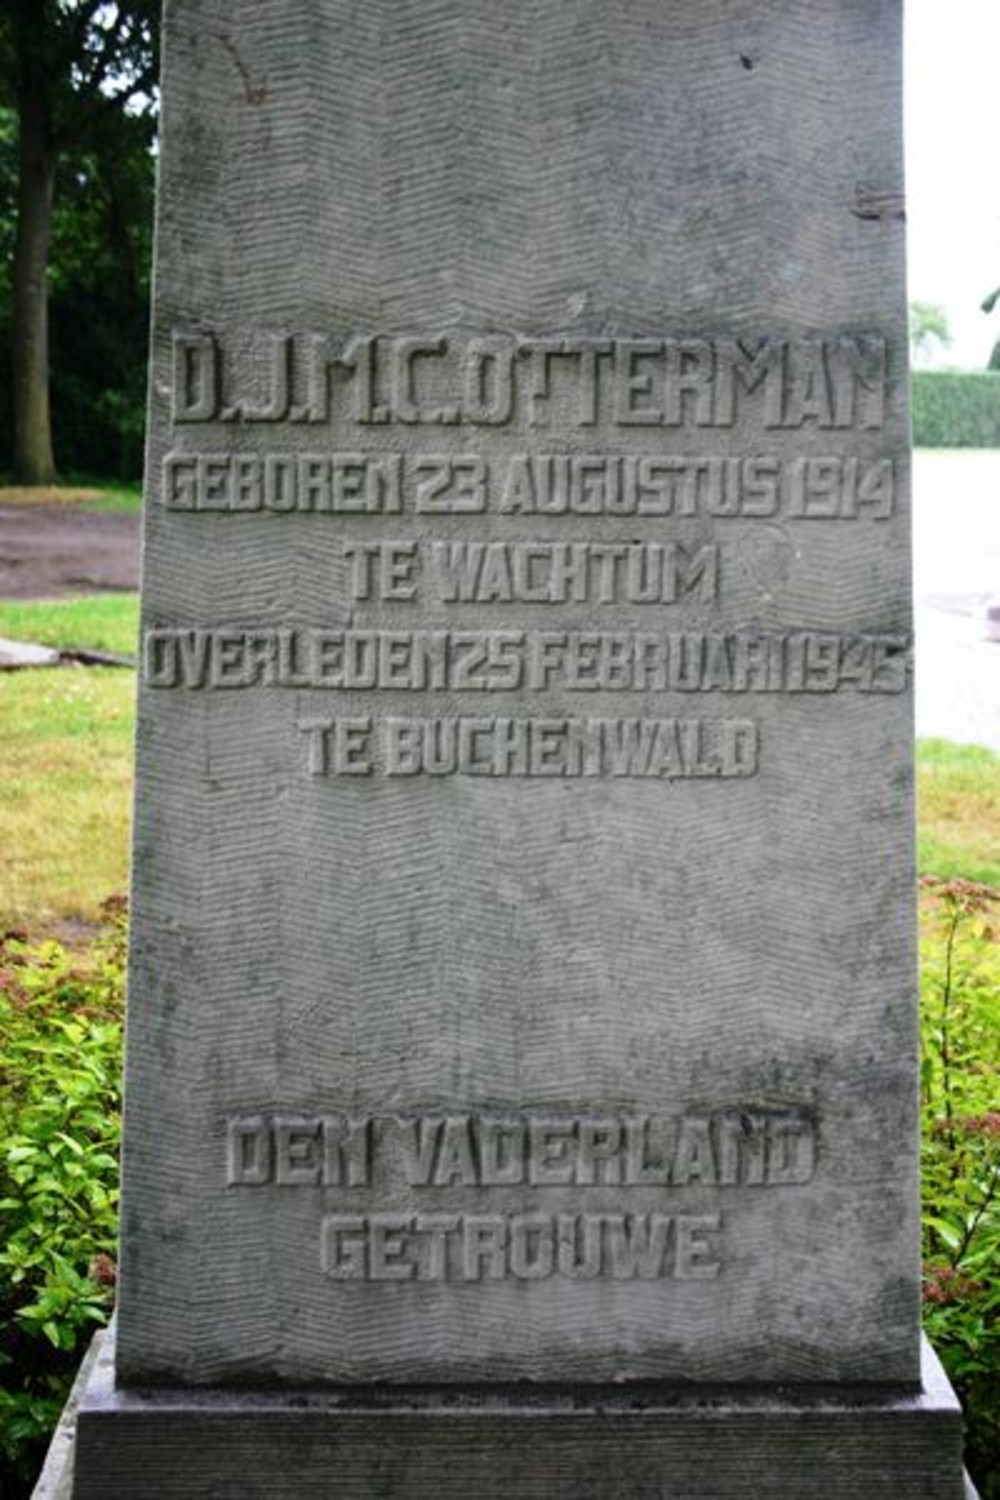 Resistance Memorial Carel Otterman Wachtum #5